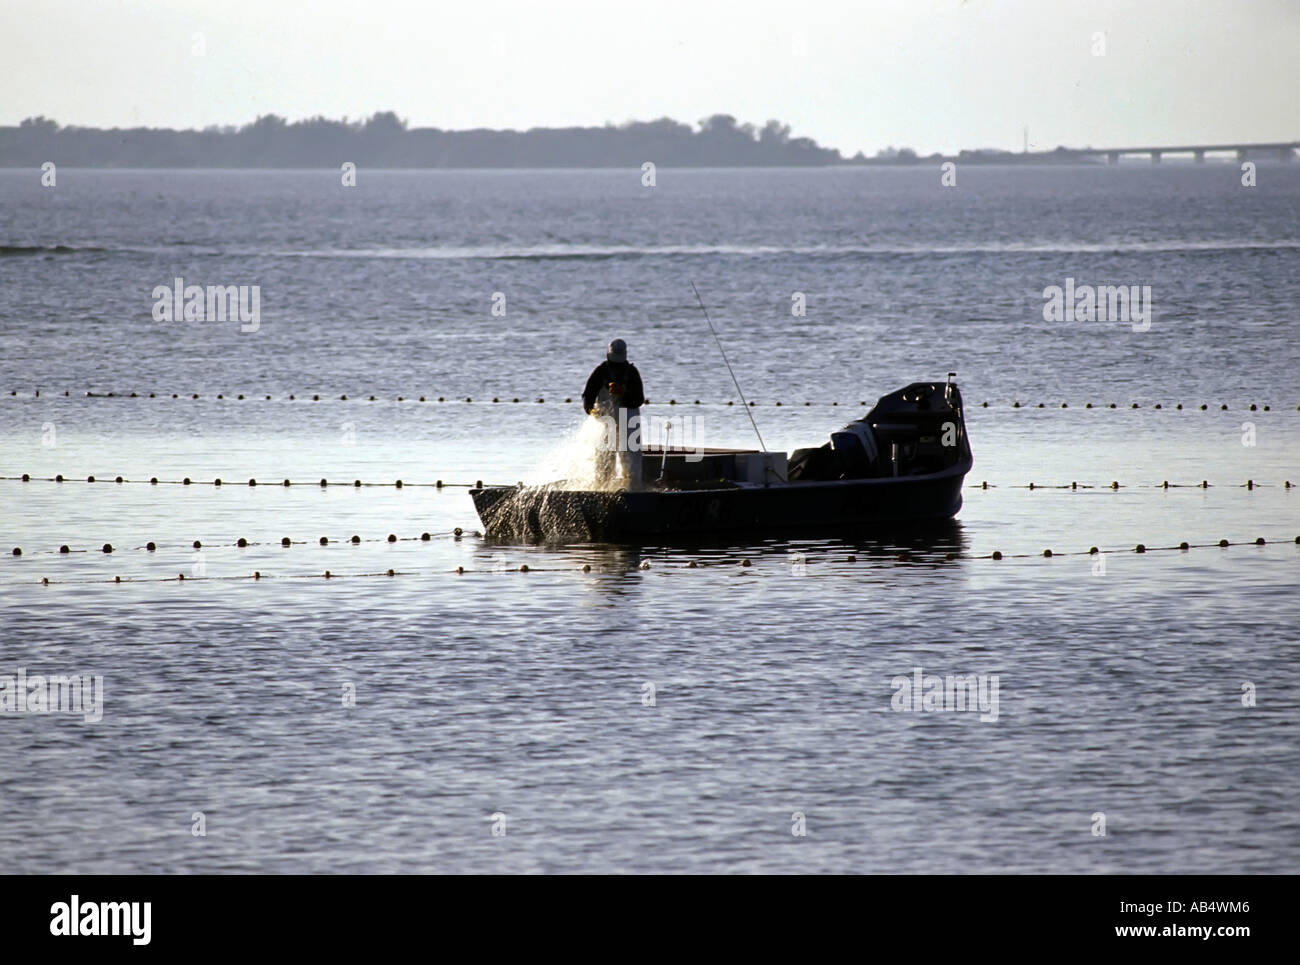 Net fishing on Tampa Bay Florida FL for a livelihood Stock Photo